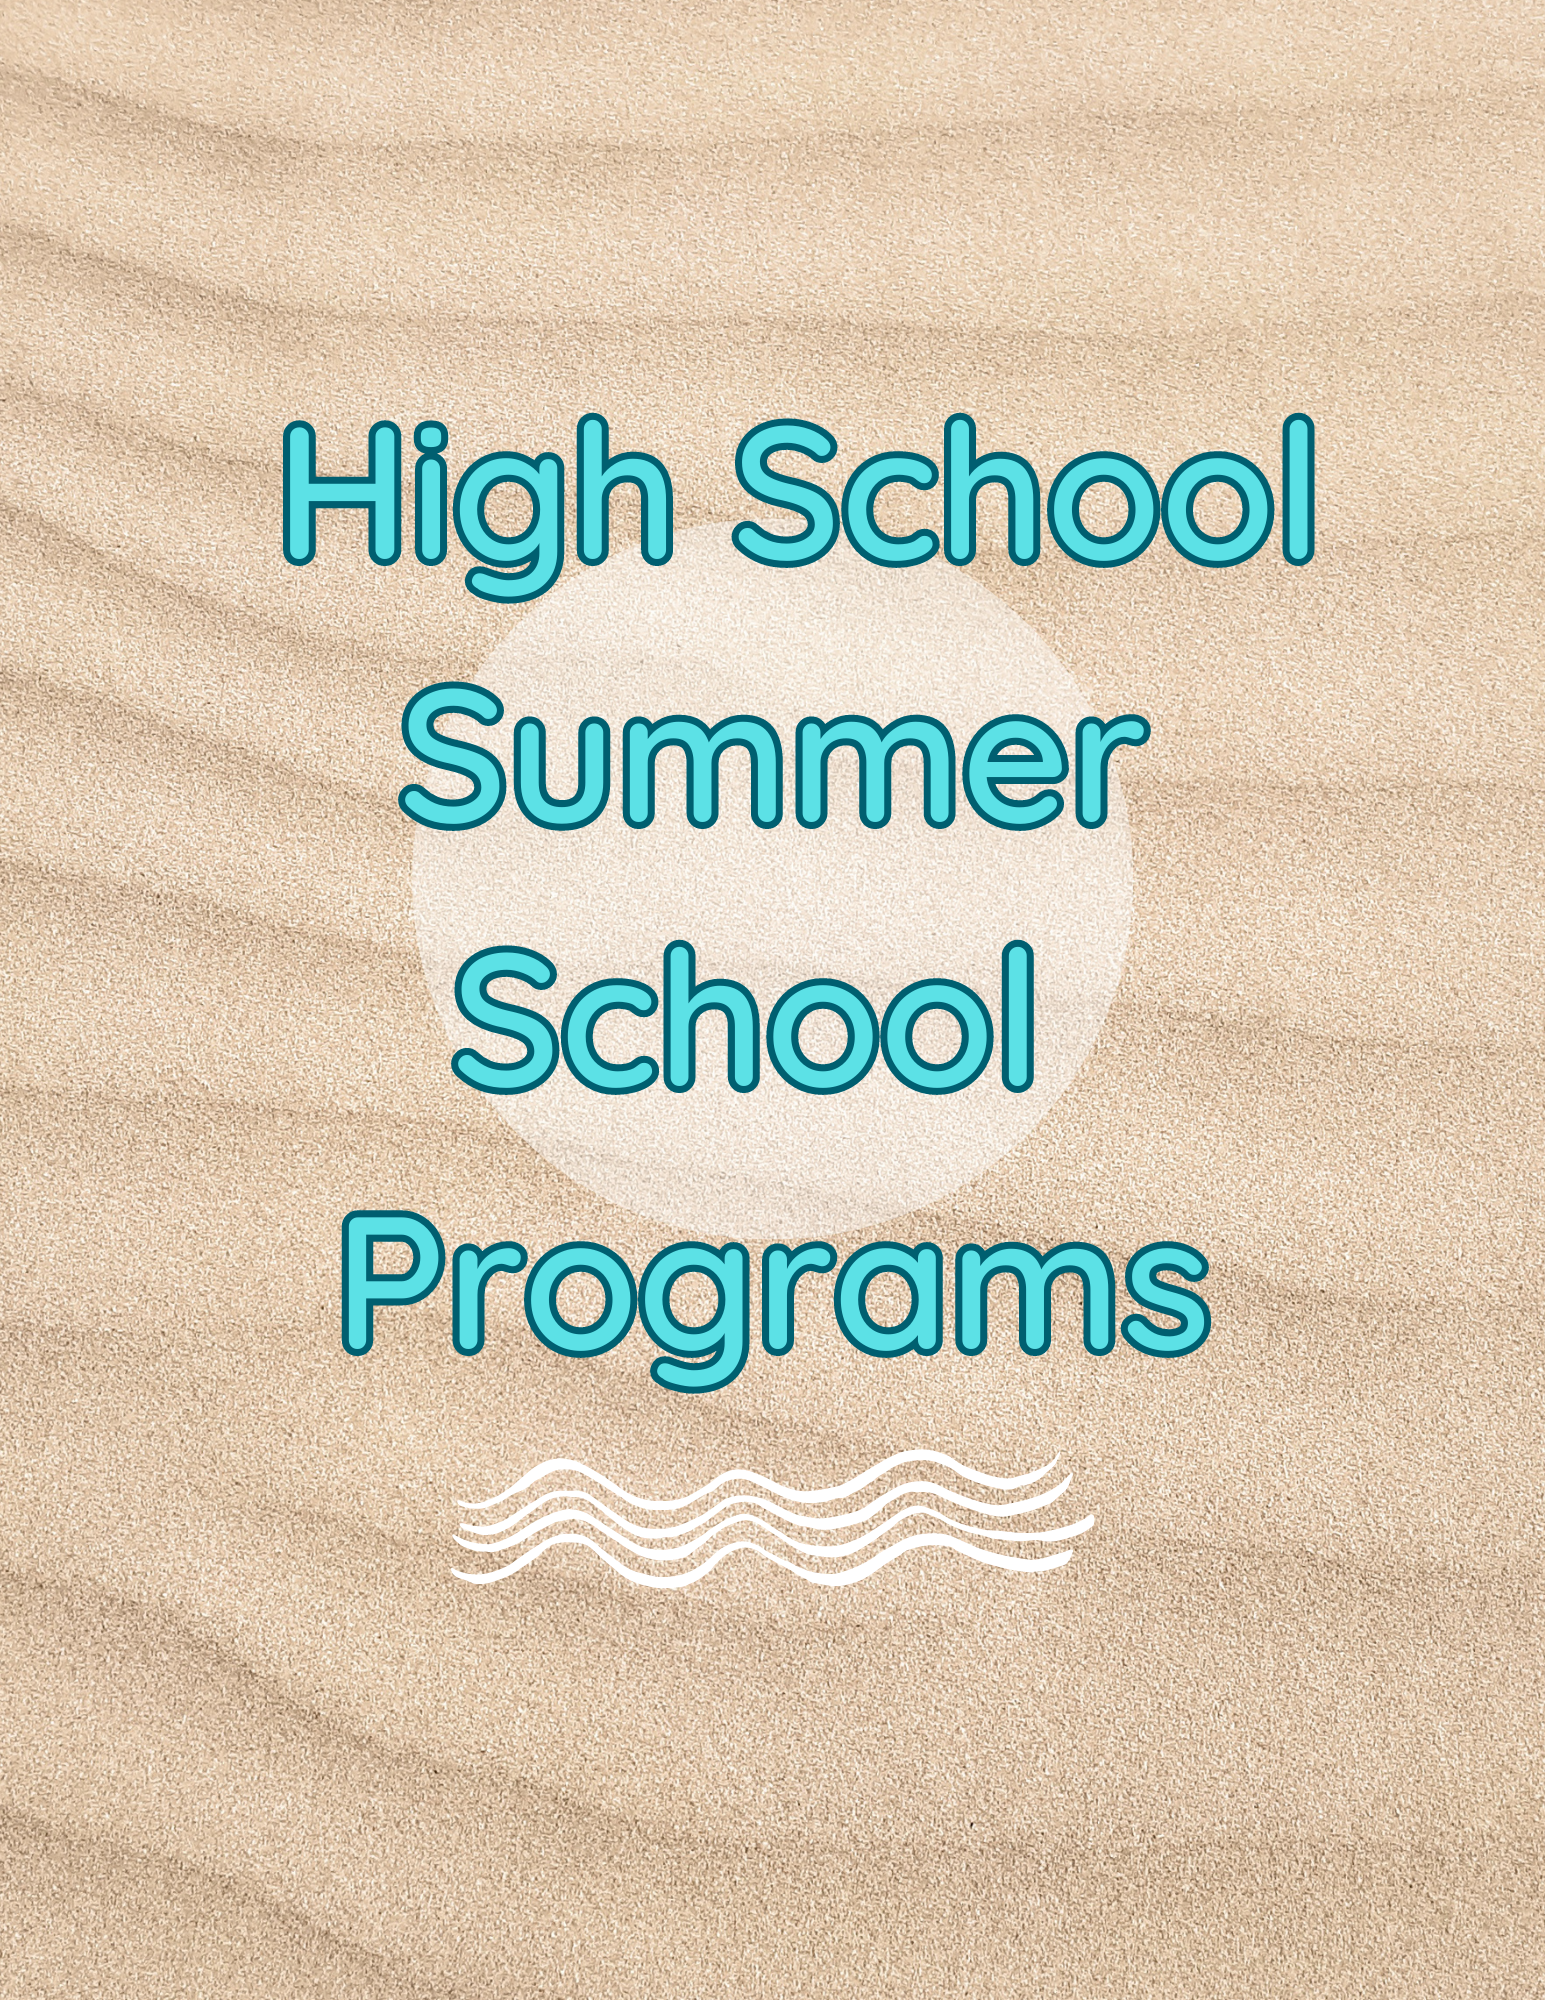 High School Summer School Programs